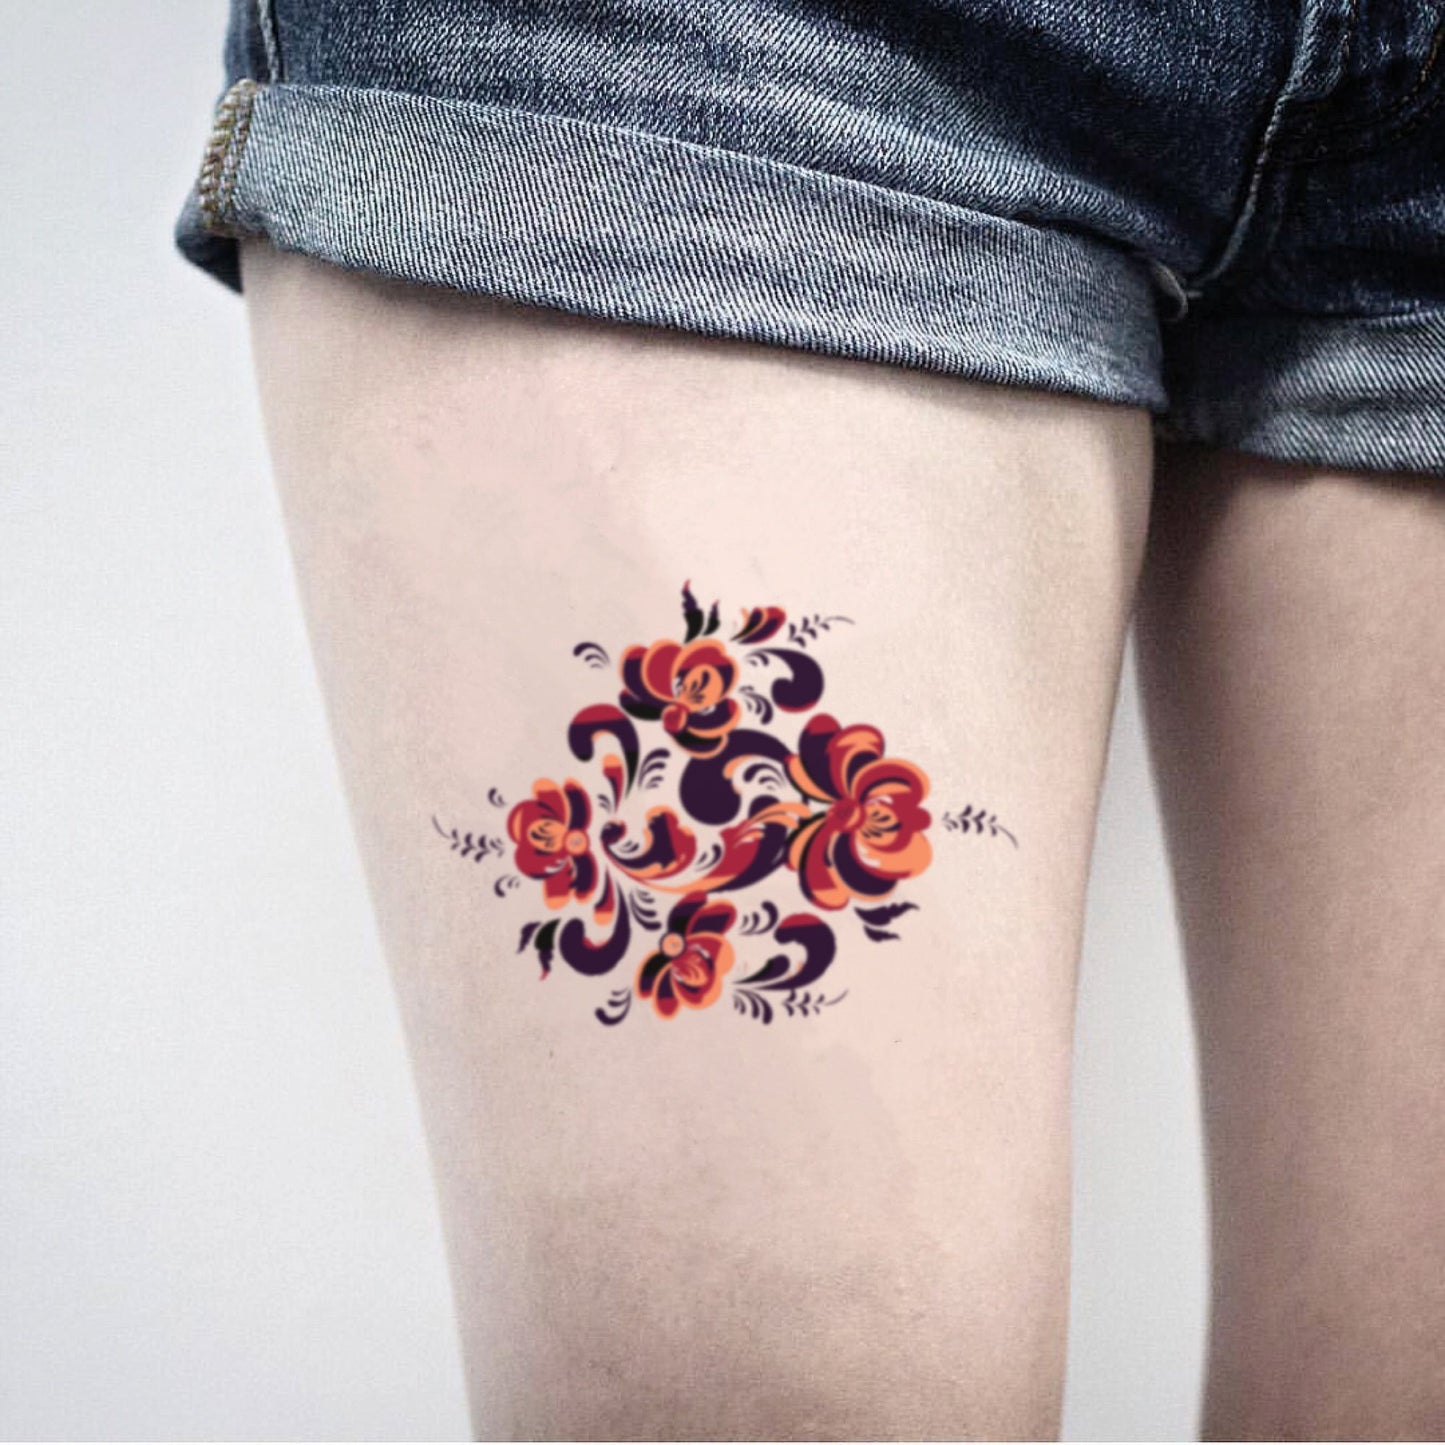 fake big rosemaling color temporary tattoo sticker design idea on thigh